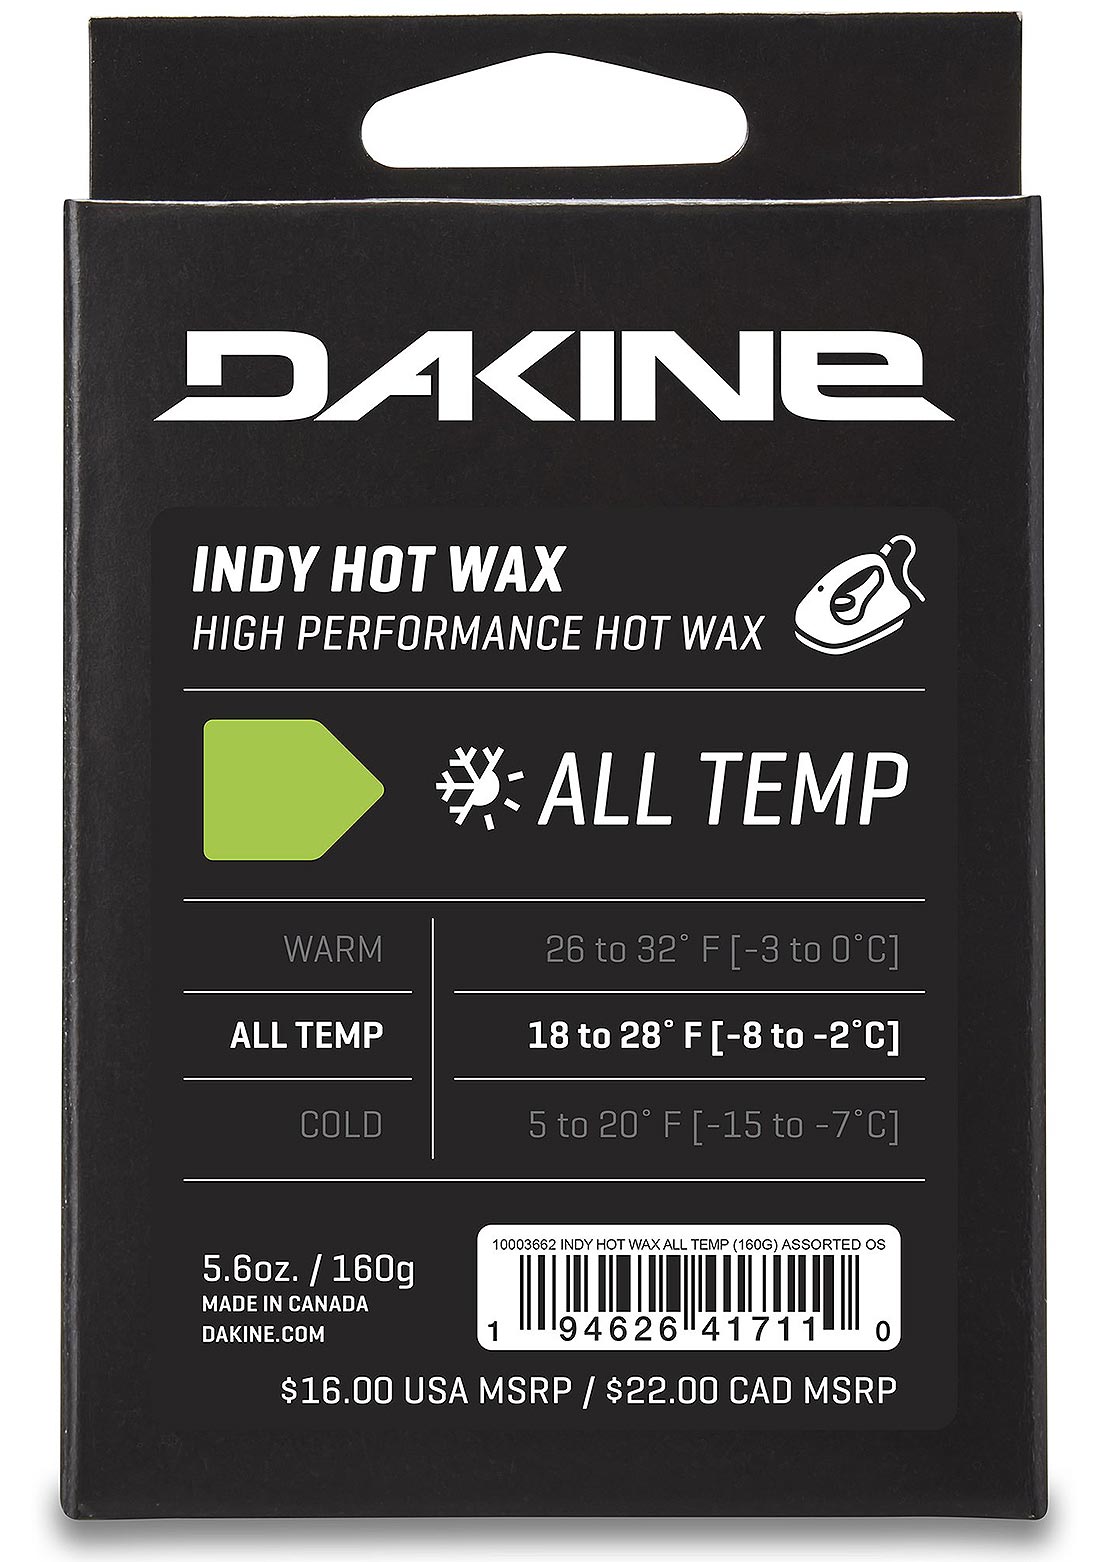 Dakine Indy Hot Wax - All Temp